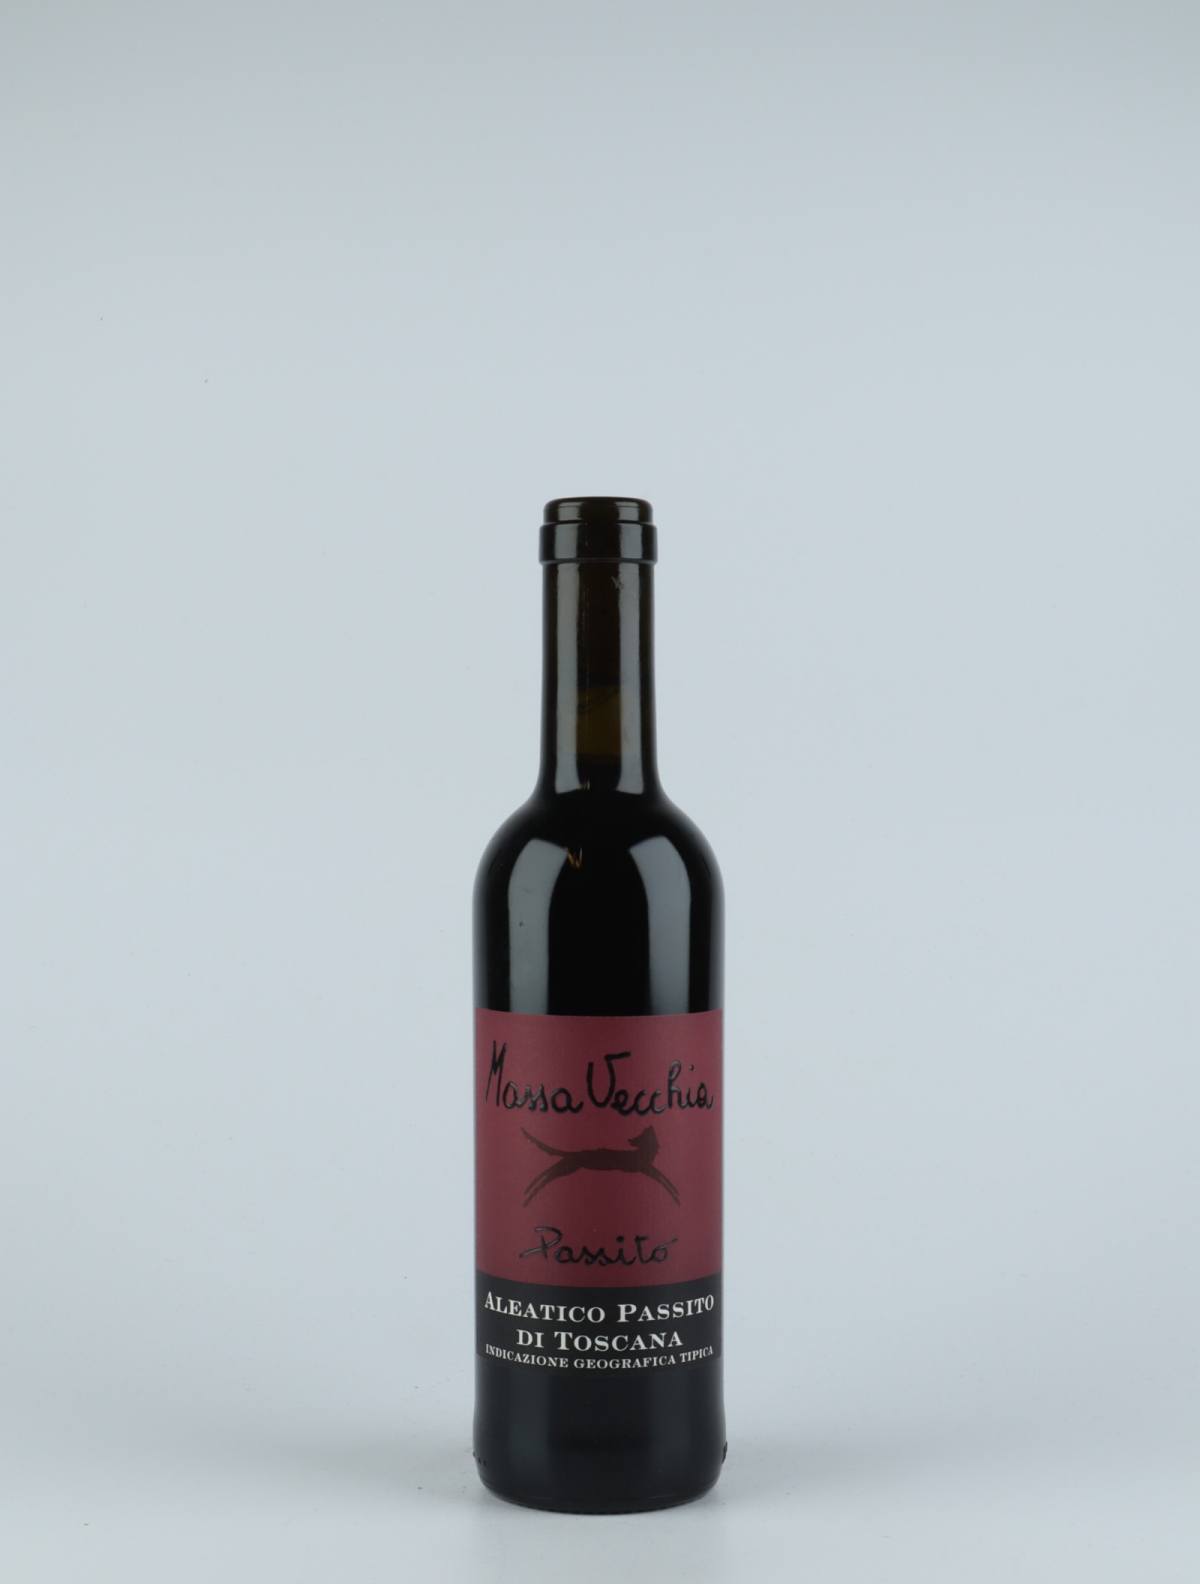 A bottle 2016 Passito Aleatico Sweet wine from Massa Vecchia, Tuscany in Italy